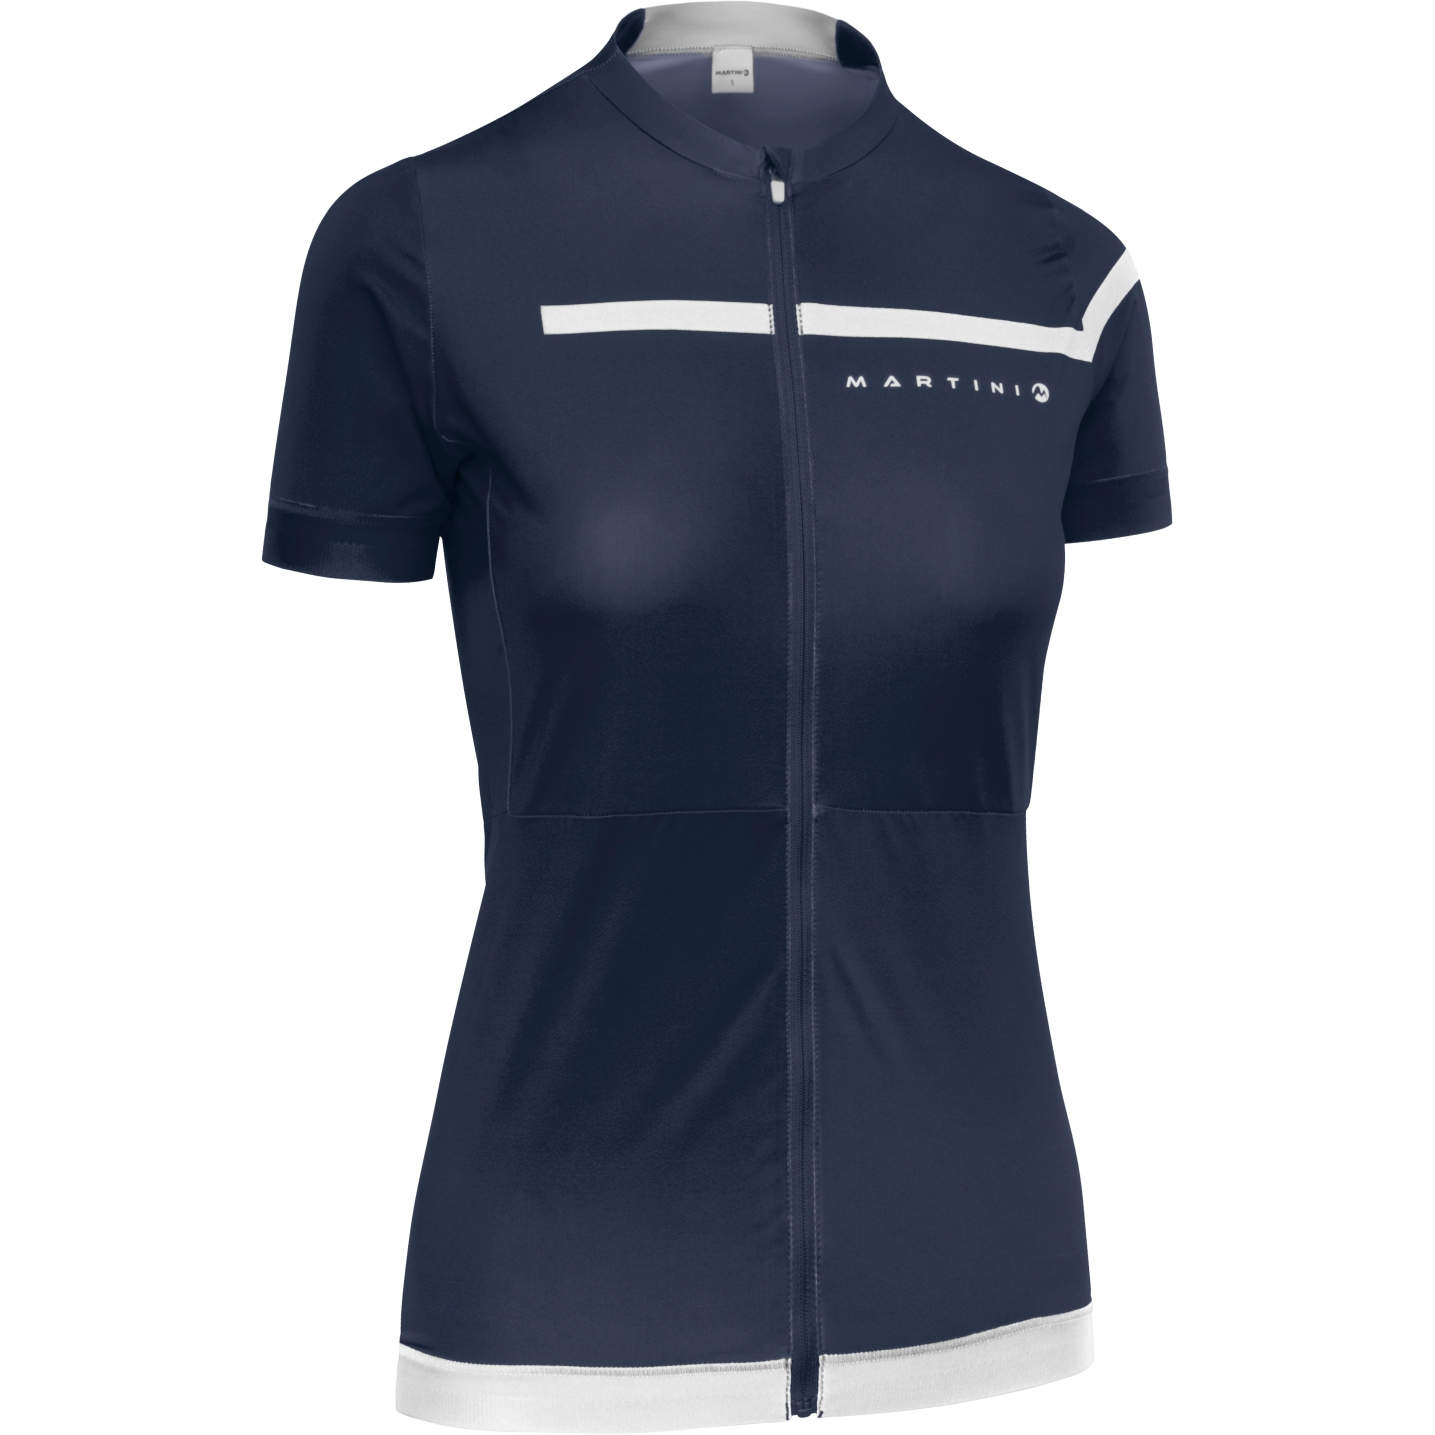 Productfoto van Martini Sportswear Vuelta Fietsshirt met Korte Mouwen Dames - true navy/white 306 19R8